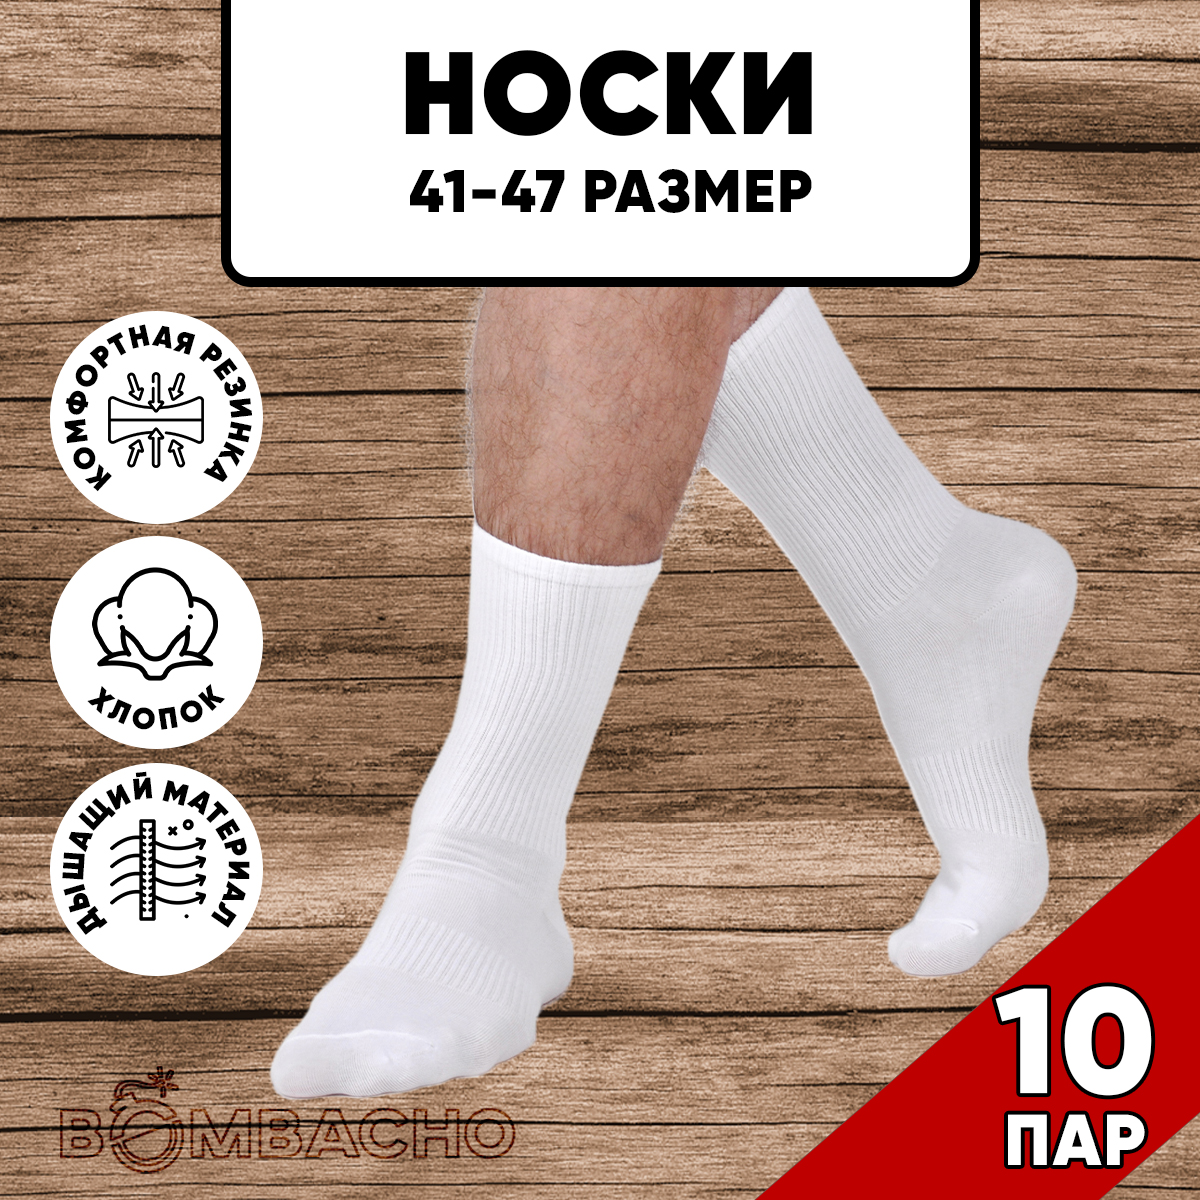 Комплект носков мужских BOMBACHO LILY SPORTS м10 белых 41-47, 10 пар